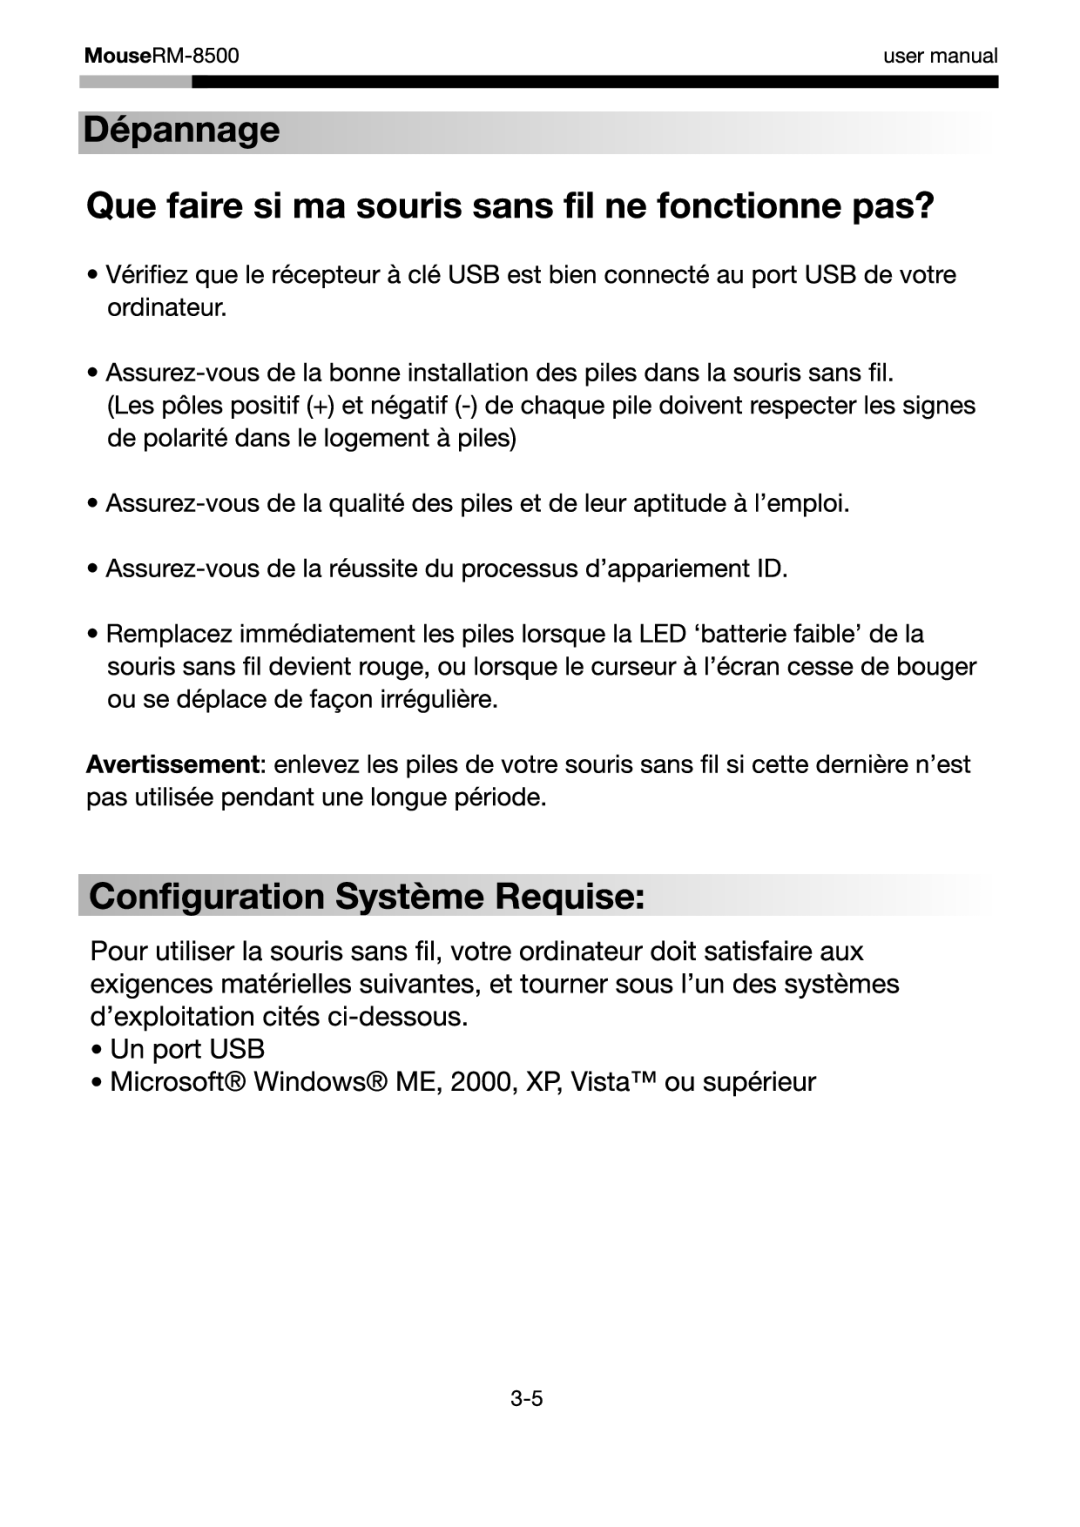 Rosewill RM-8500 user manual 